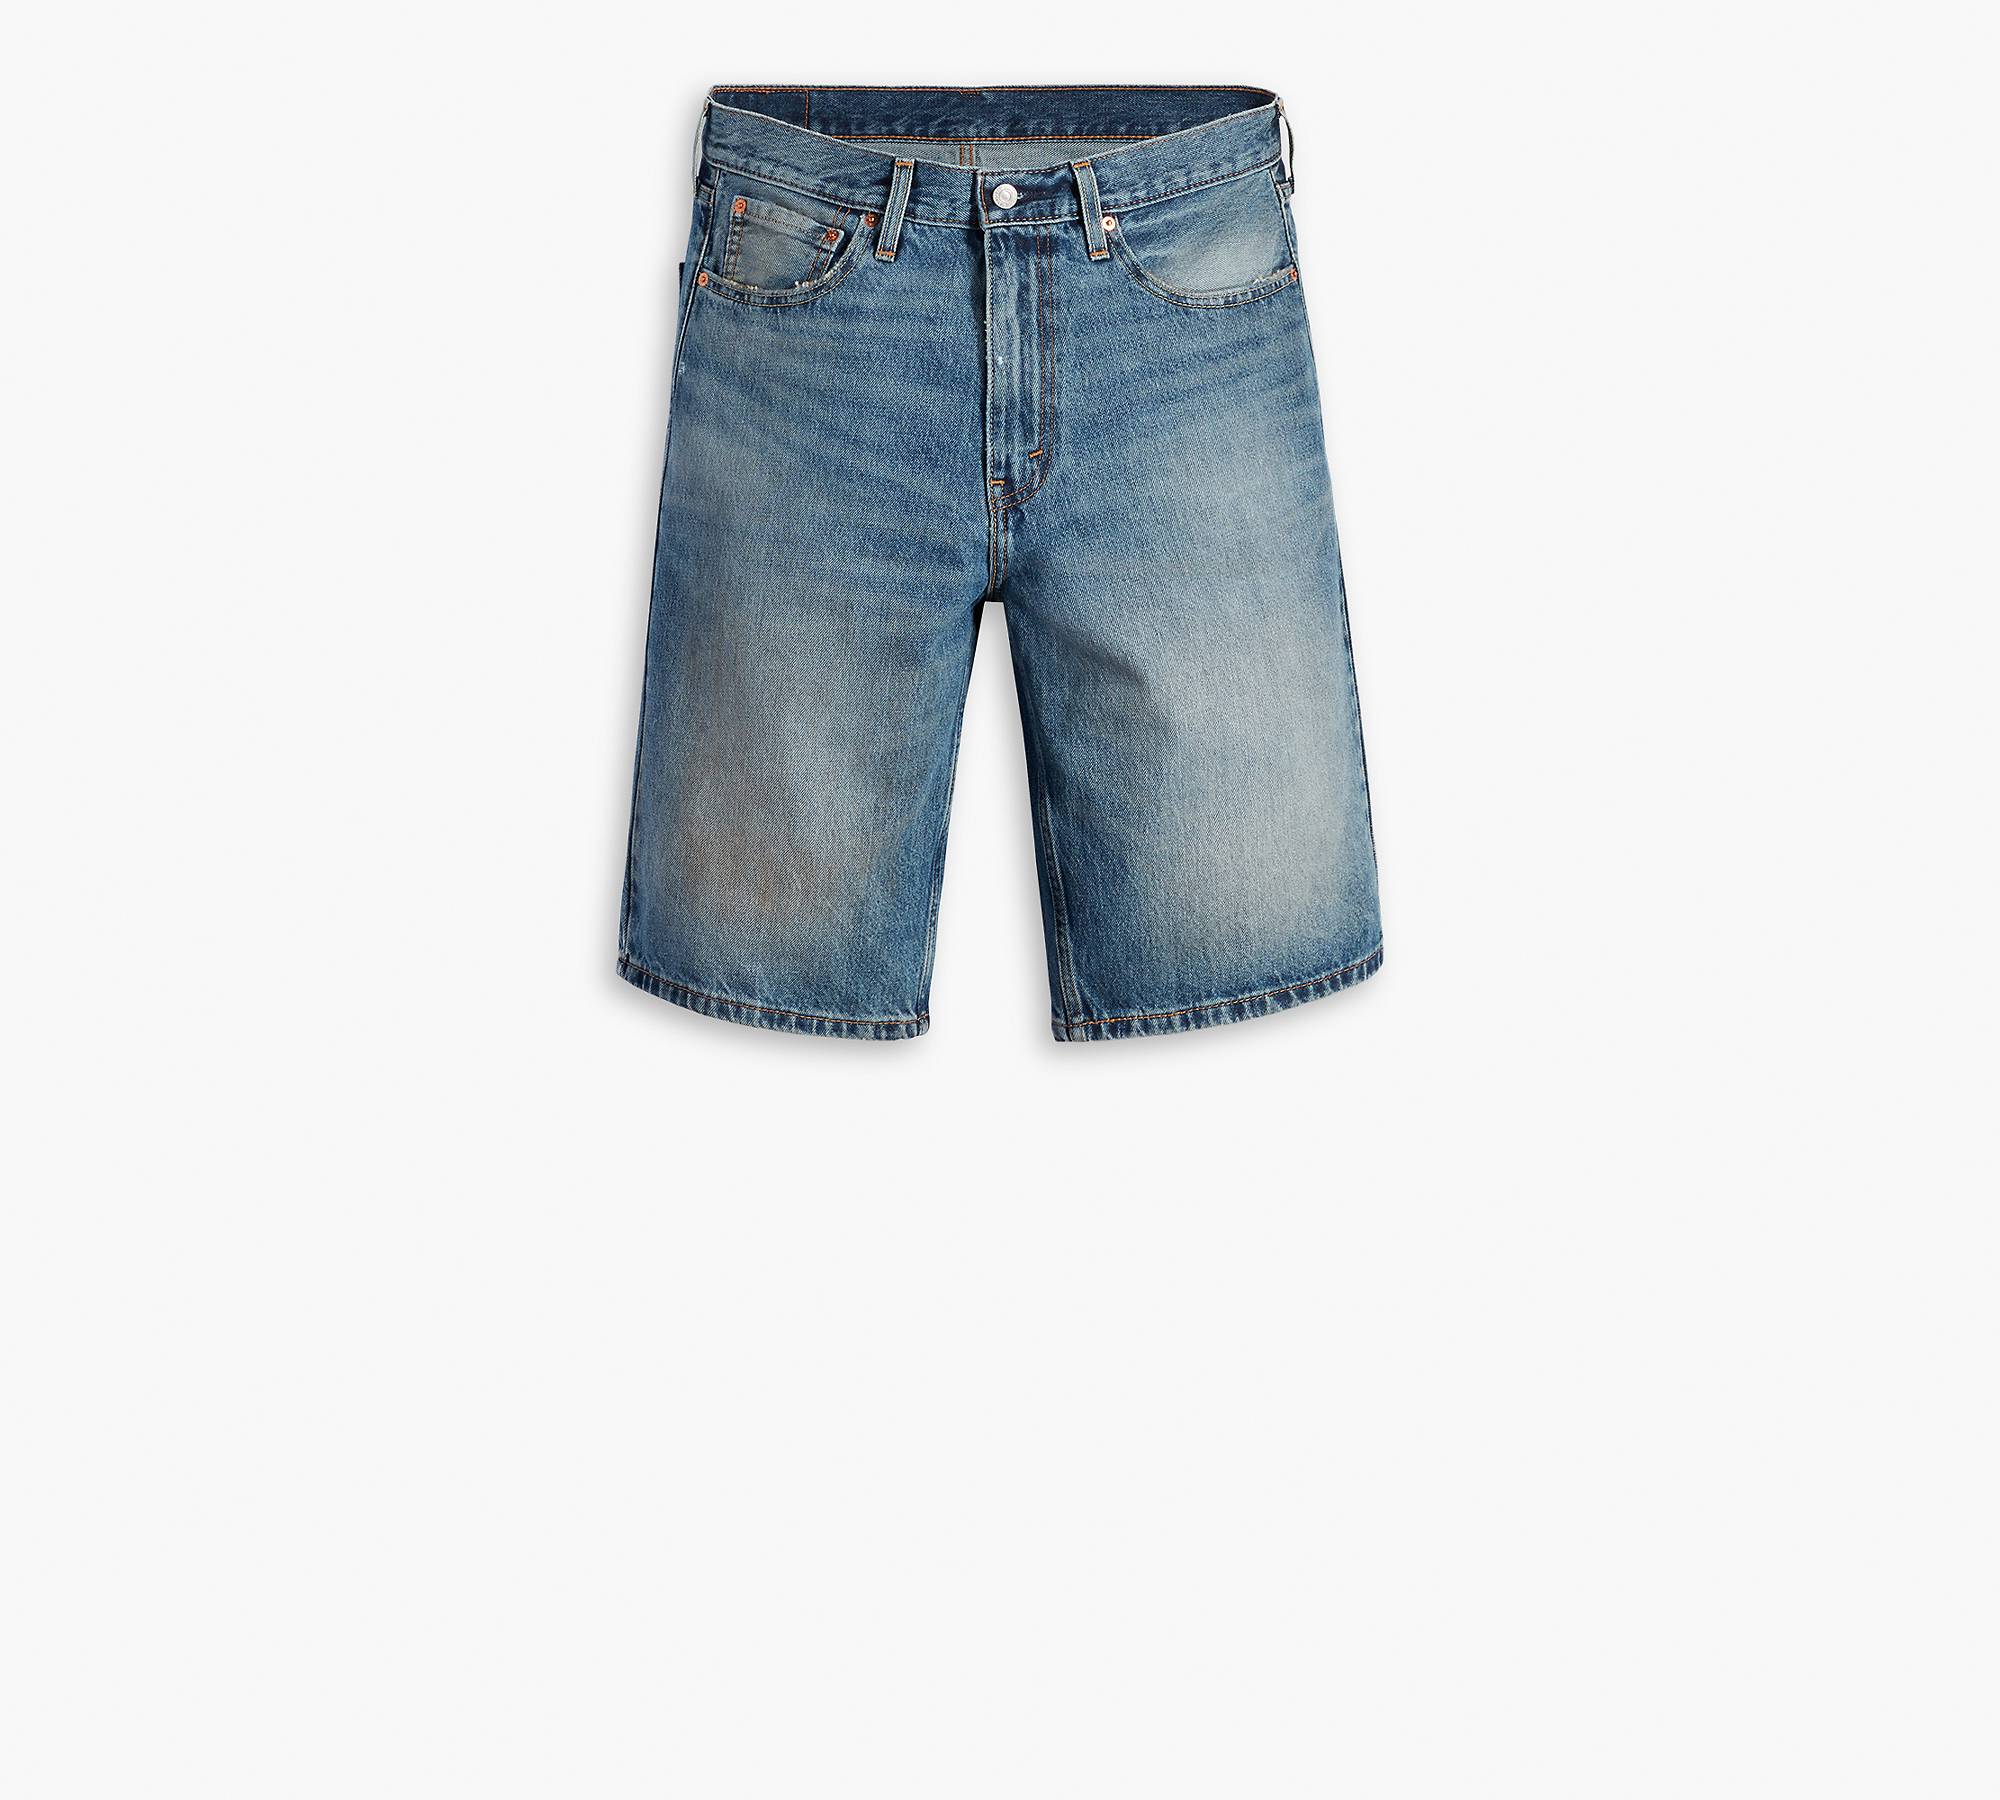 469 Loose Jean 12 Men's Shorts - Medium Wash